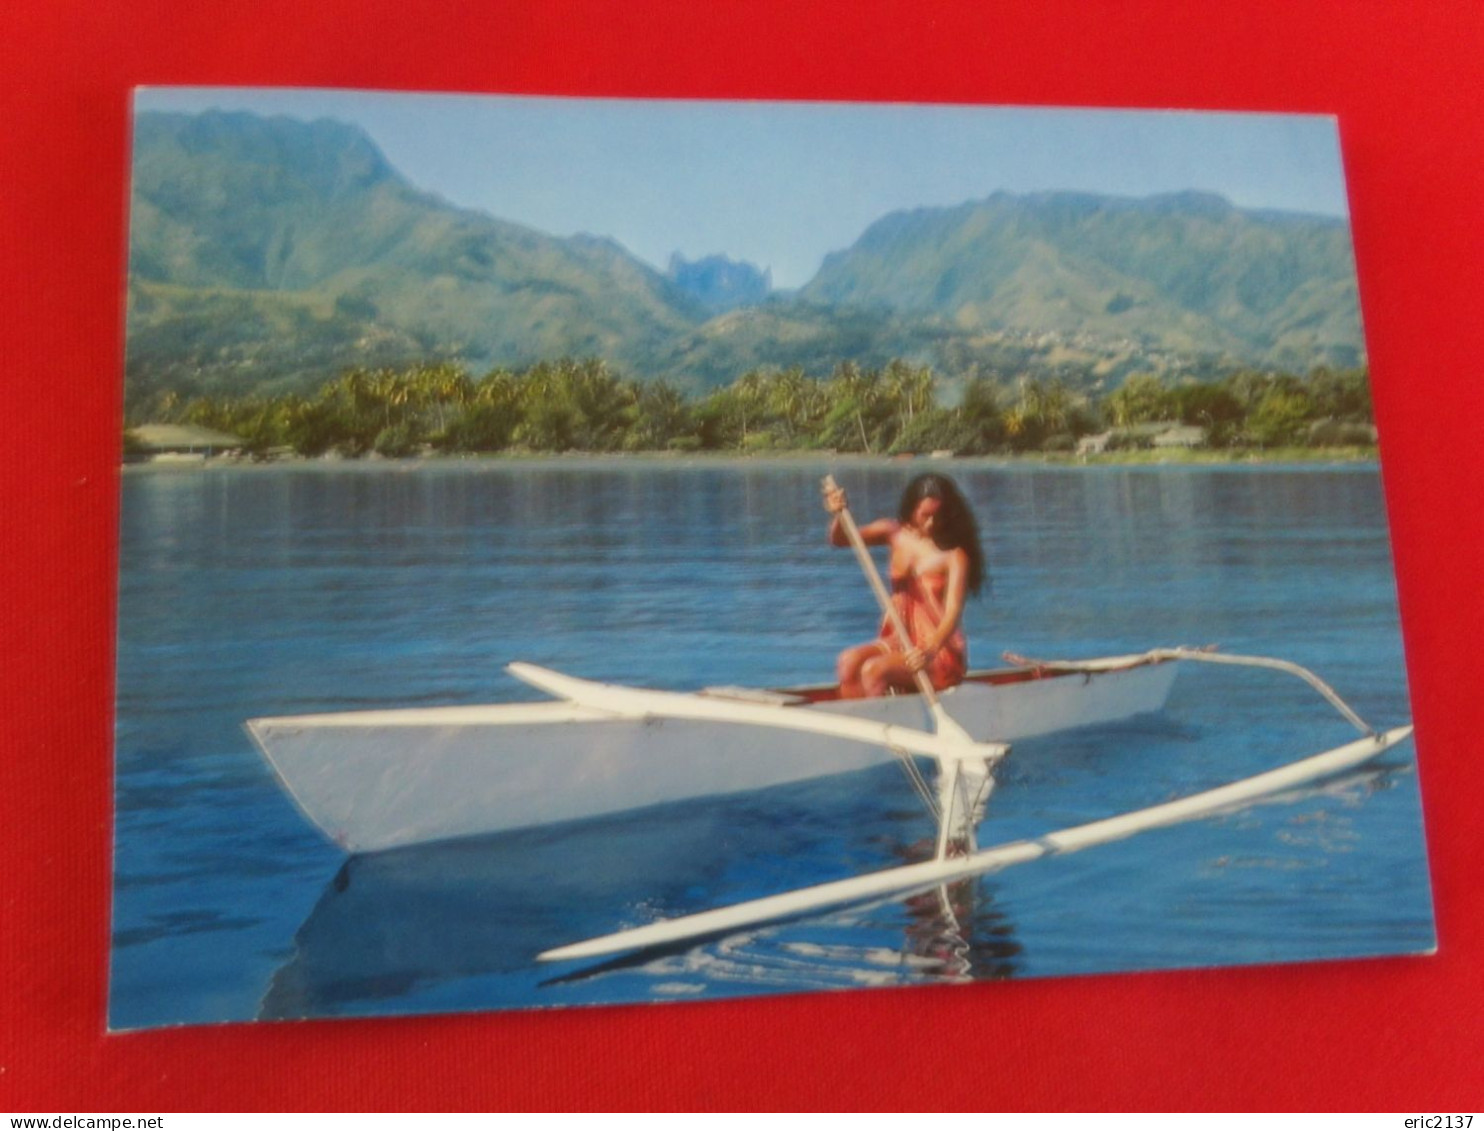 BELLE CARTE ..BELLE FEMME..."PROMENADE ONA SMALL CANOE" ..PHOTO TEVA SYLVAIN - Polynésie Française